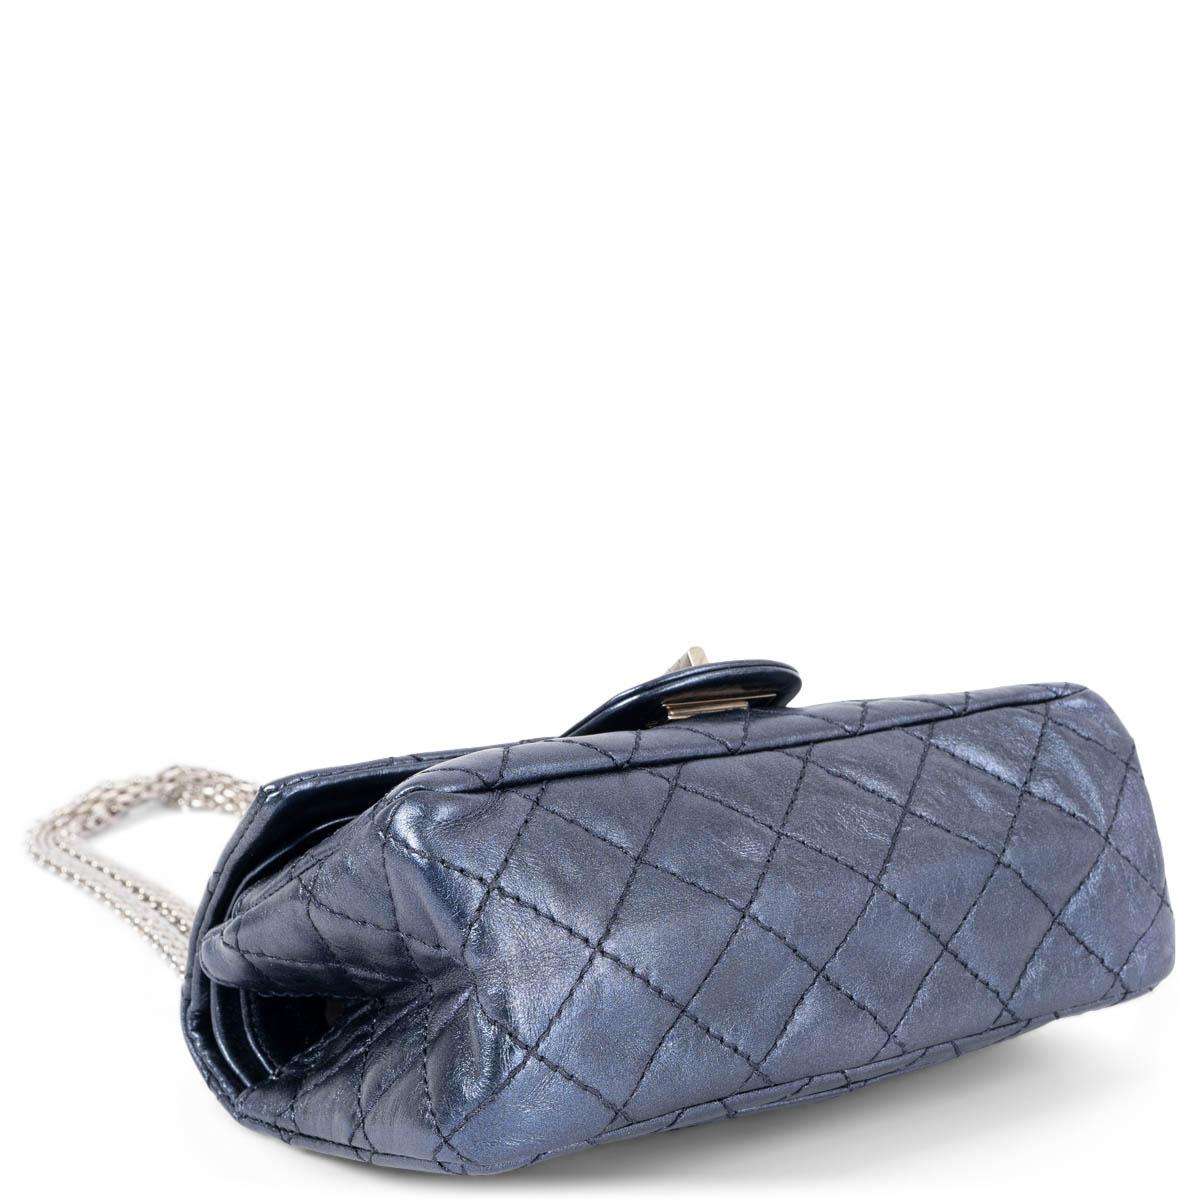 Women's CHANEL metallic blue leather 2.55 REISSUE MINI FLAP Shoulder Bag For Sale